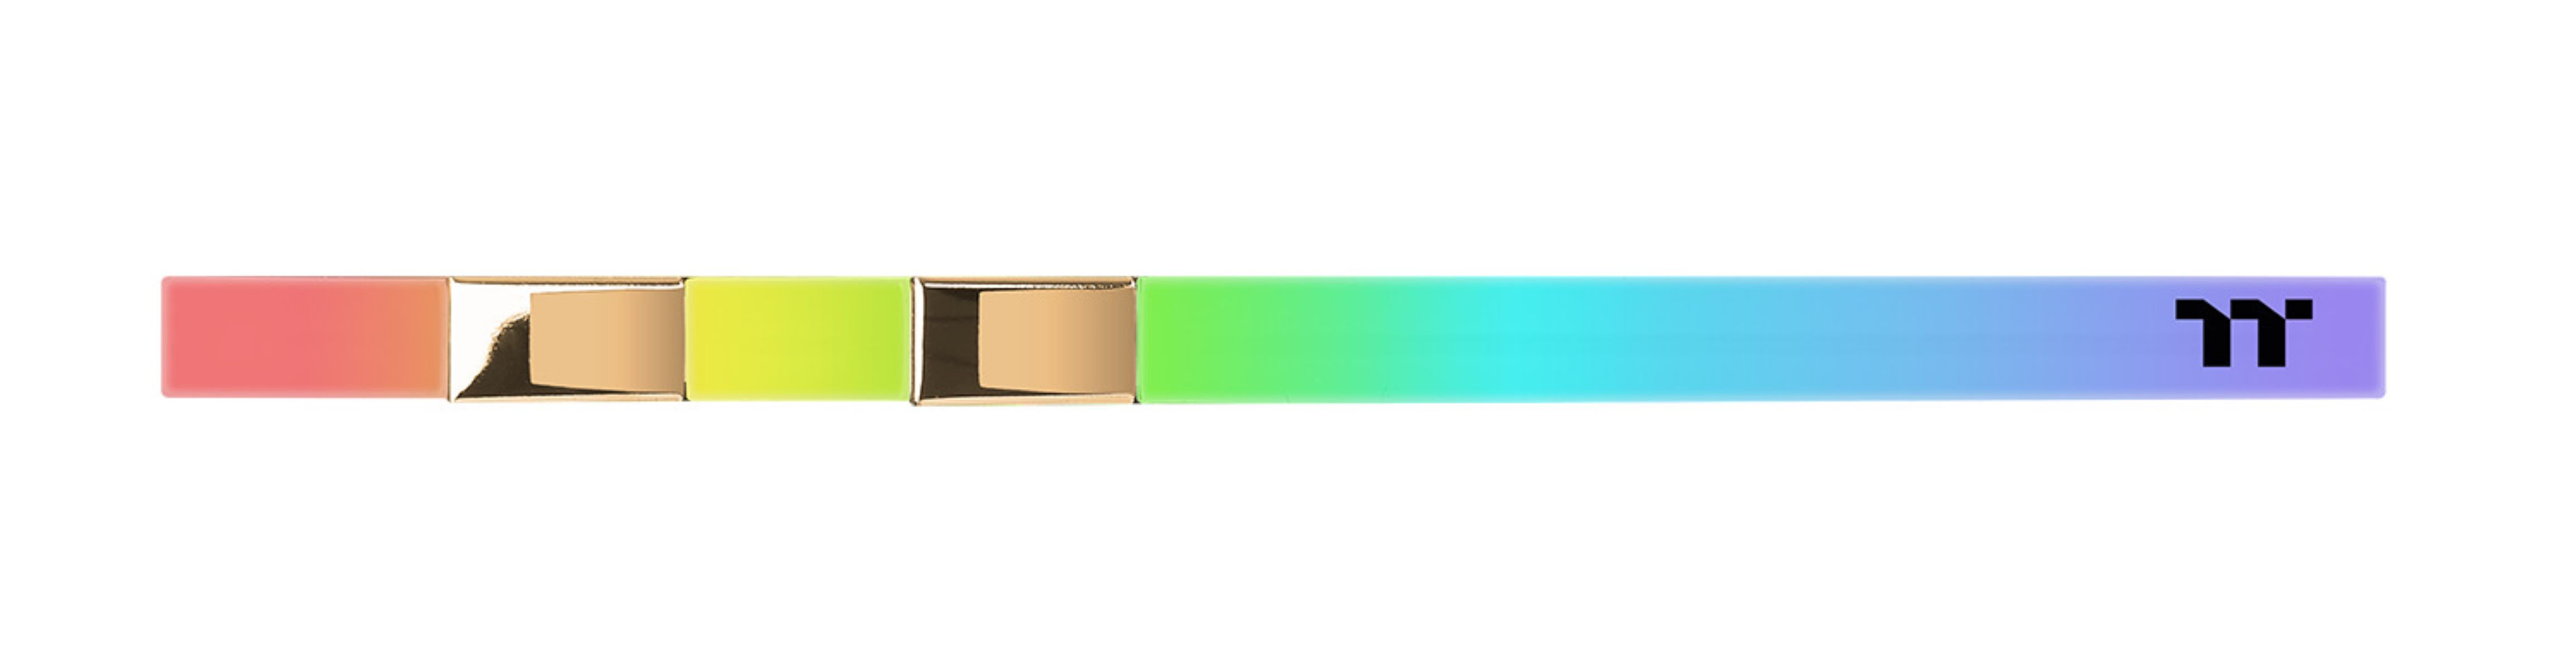 THERMALTAKE TOUGHRAM Gold Metallic RGB GB Arbeitsspeicher 16 DDR4